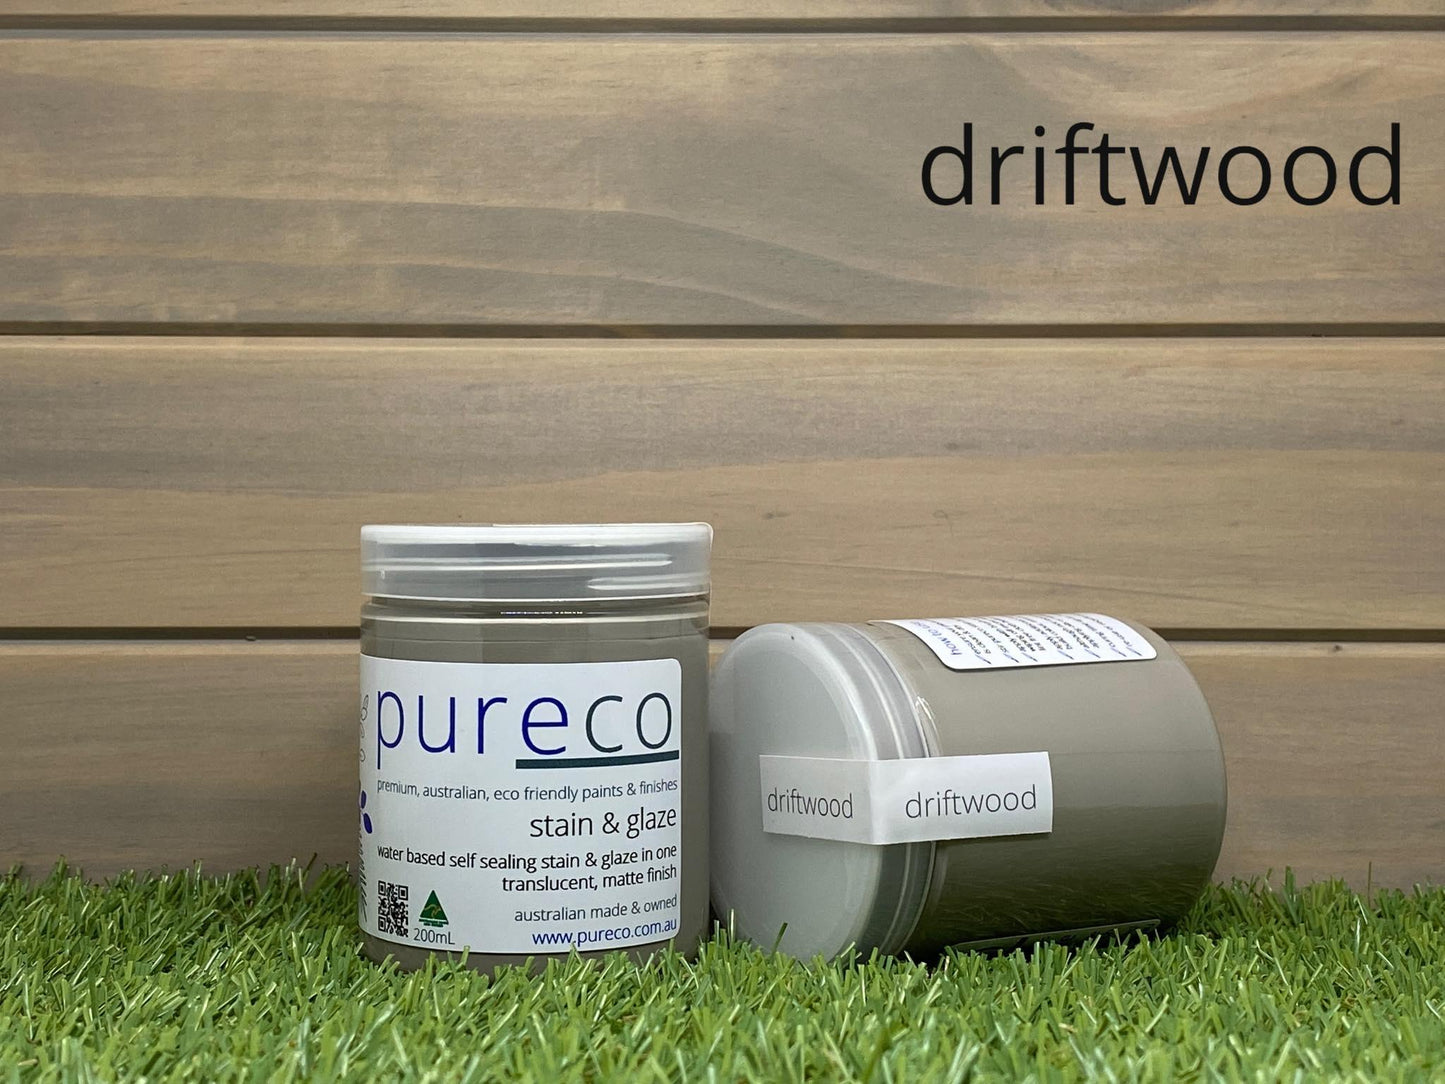 Pureco stain & glaze Driftwood